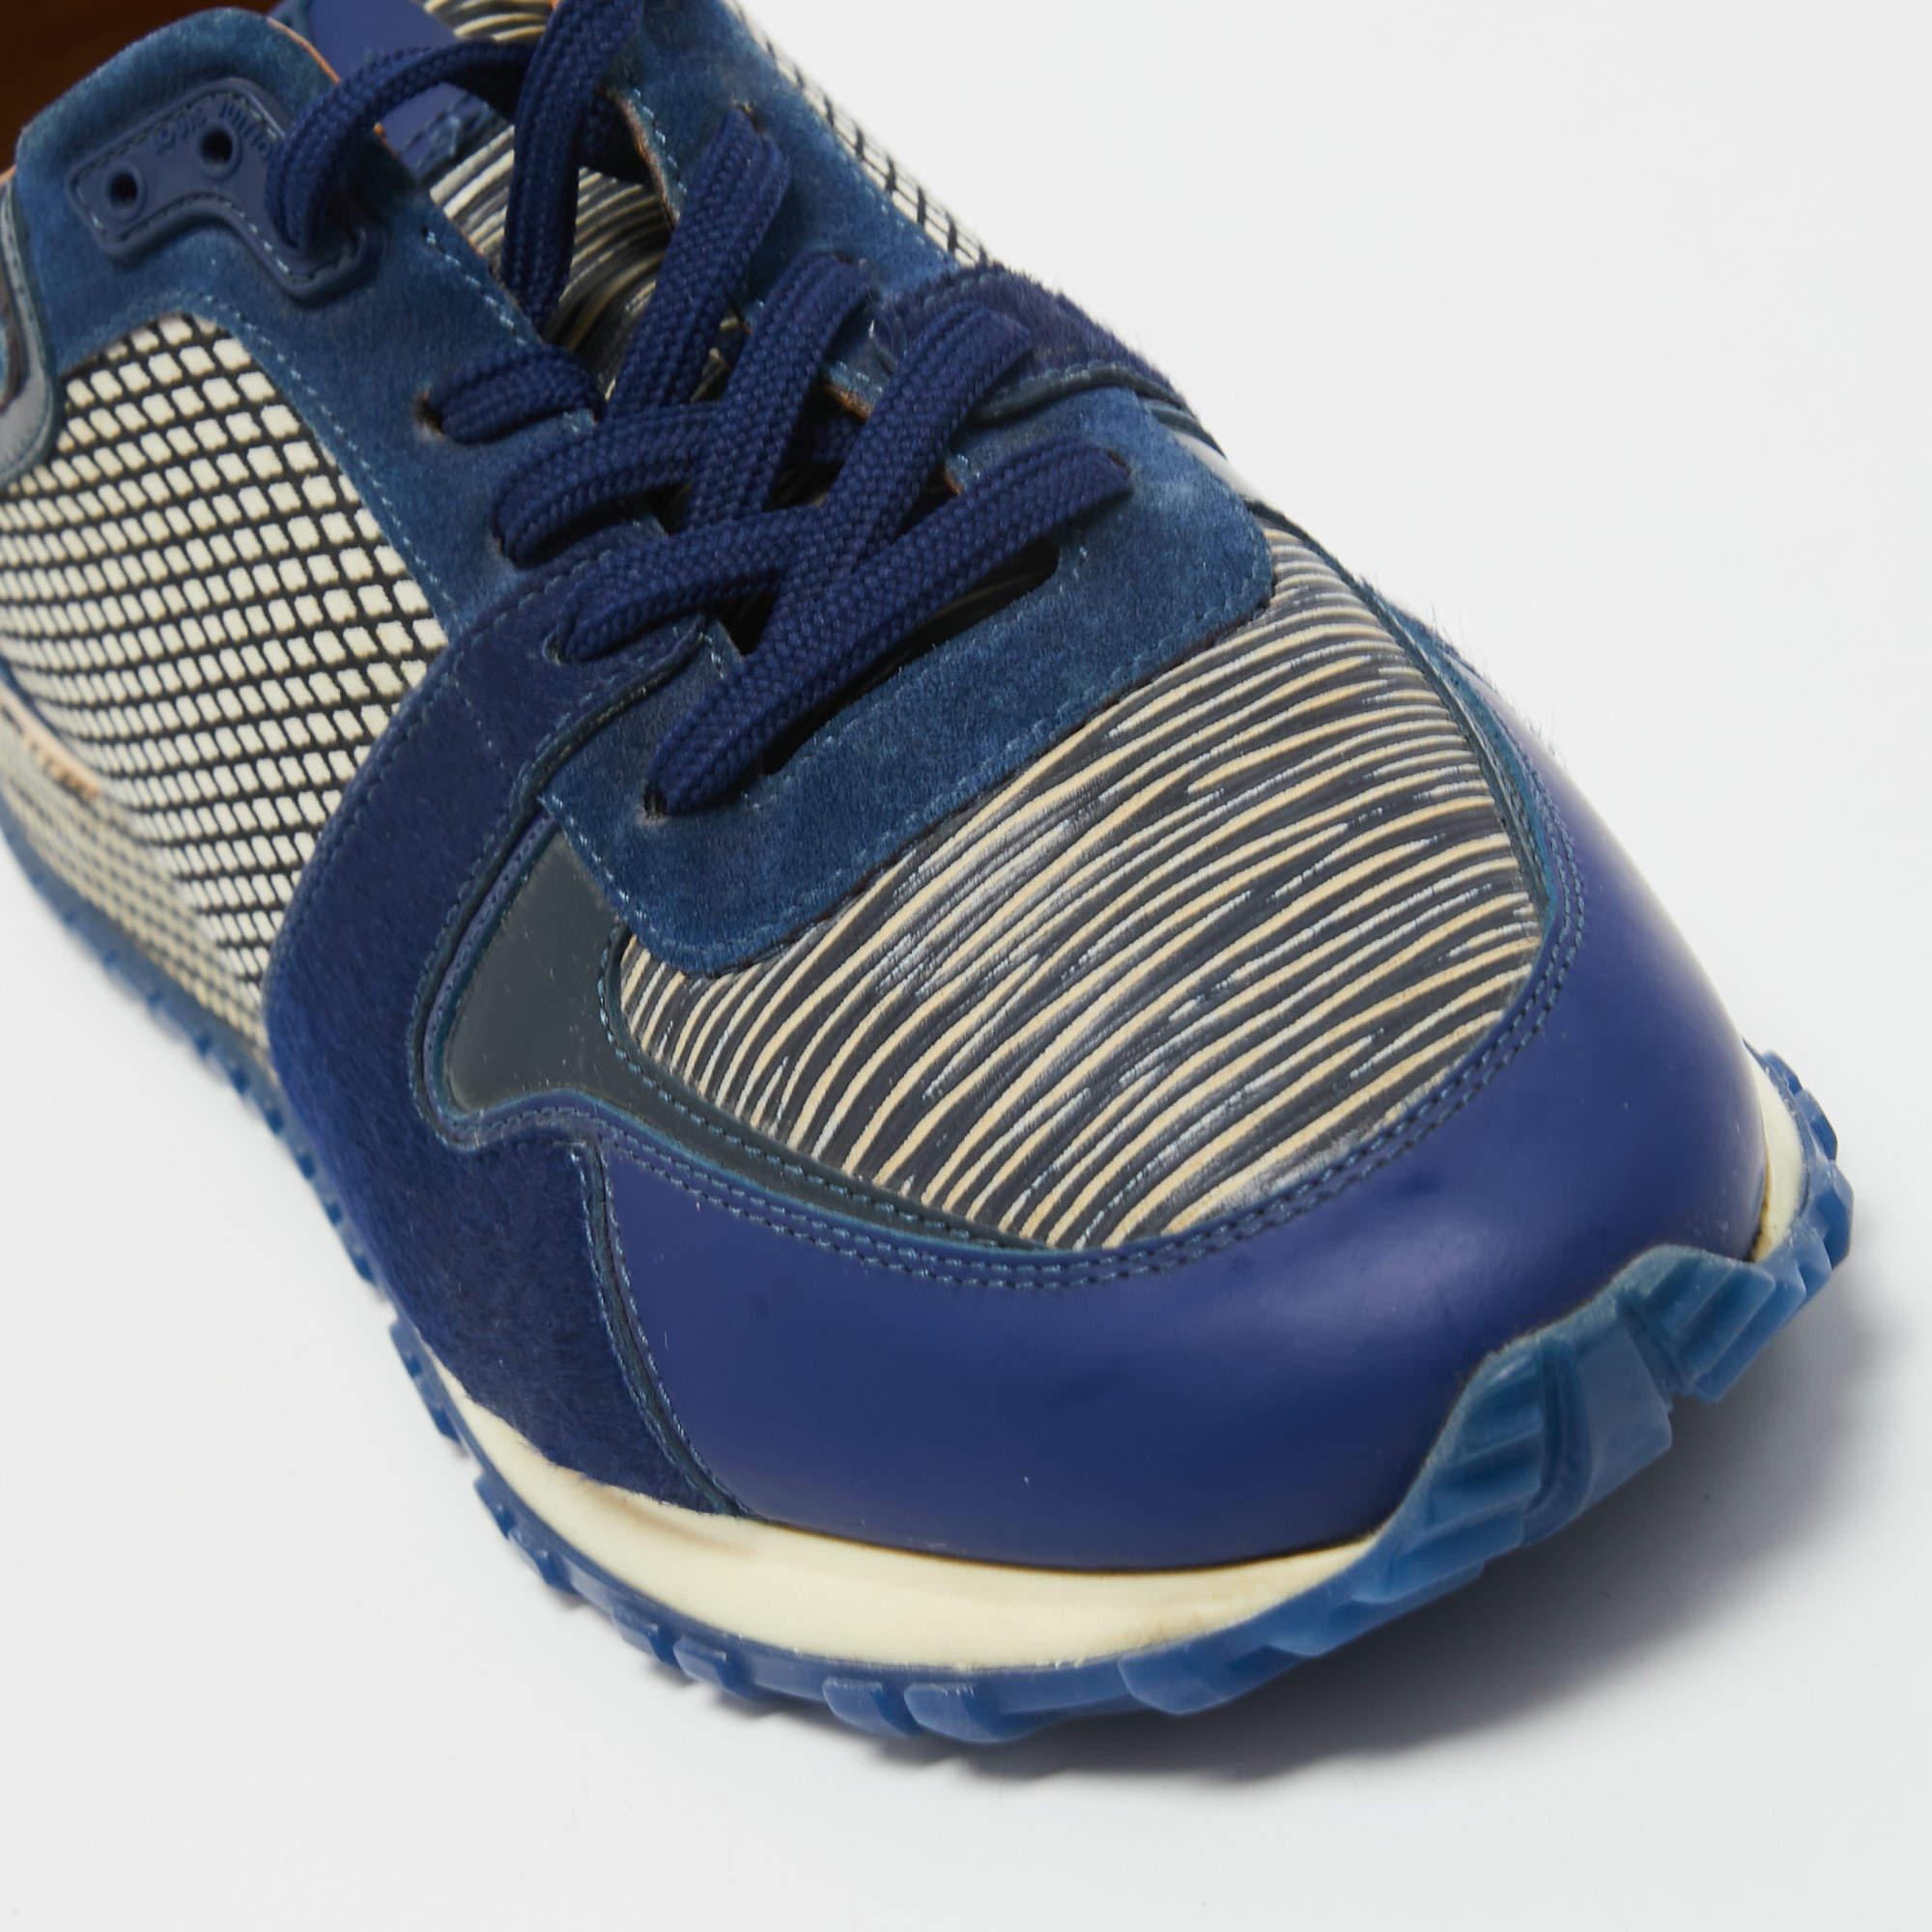 Louis Vuitton Multicolor Epi Calf Hair and Suede Run Away Sneakers Size 38.5 1